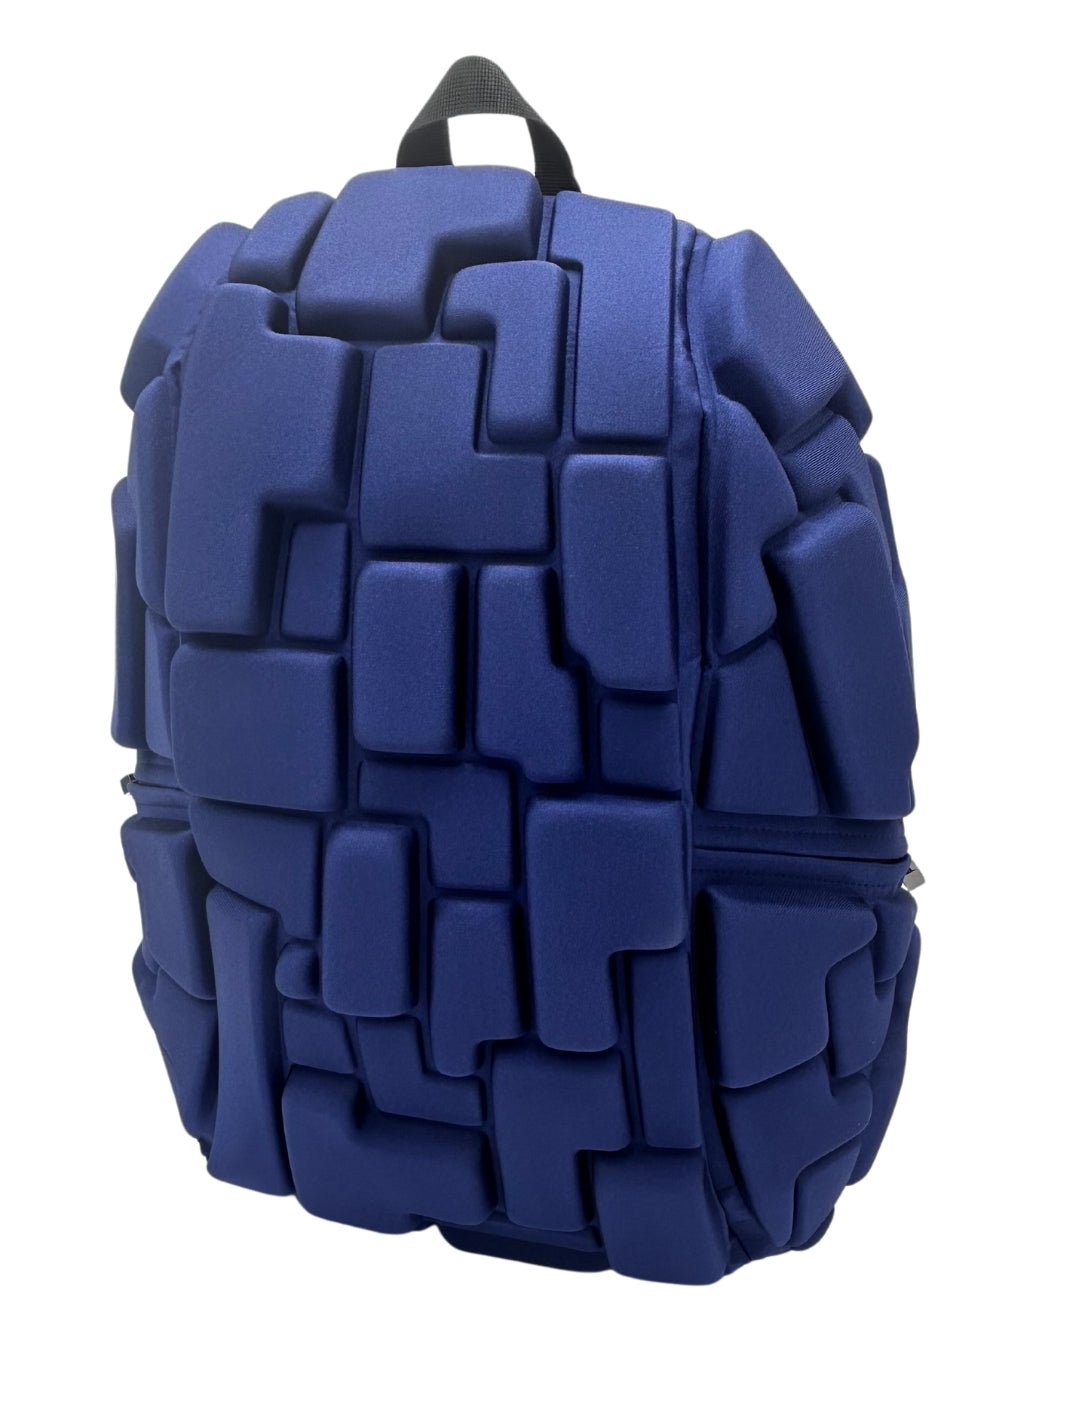 Wild Blue Yonder navy blue backpack - Madpax